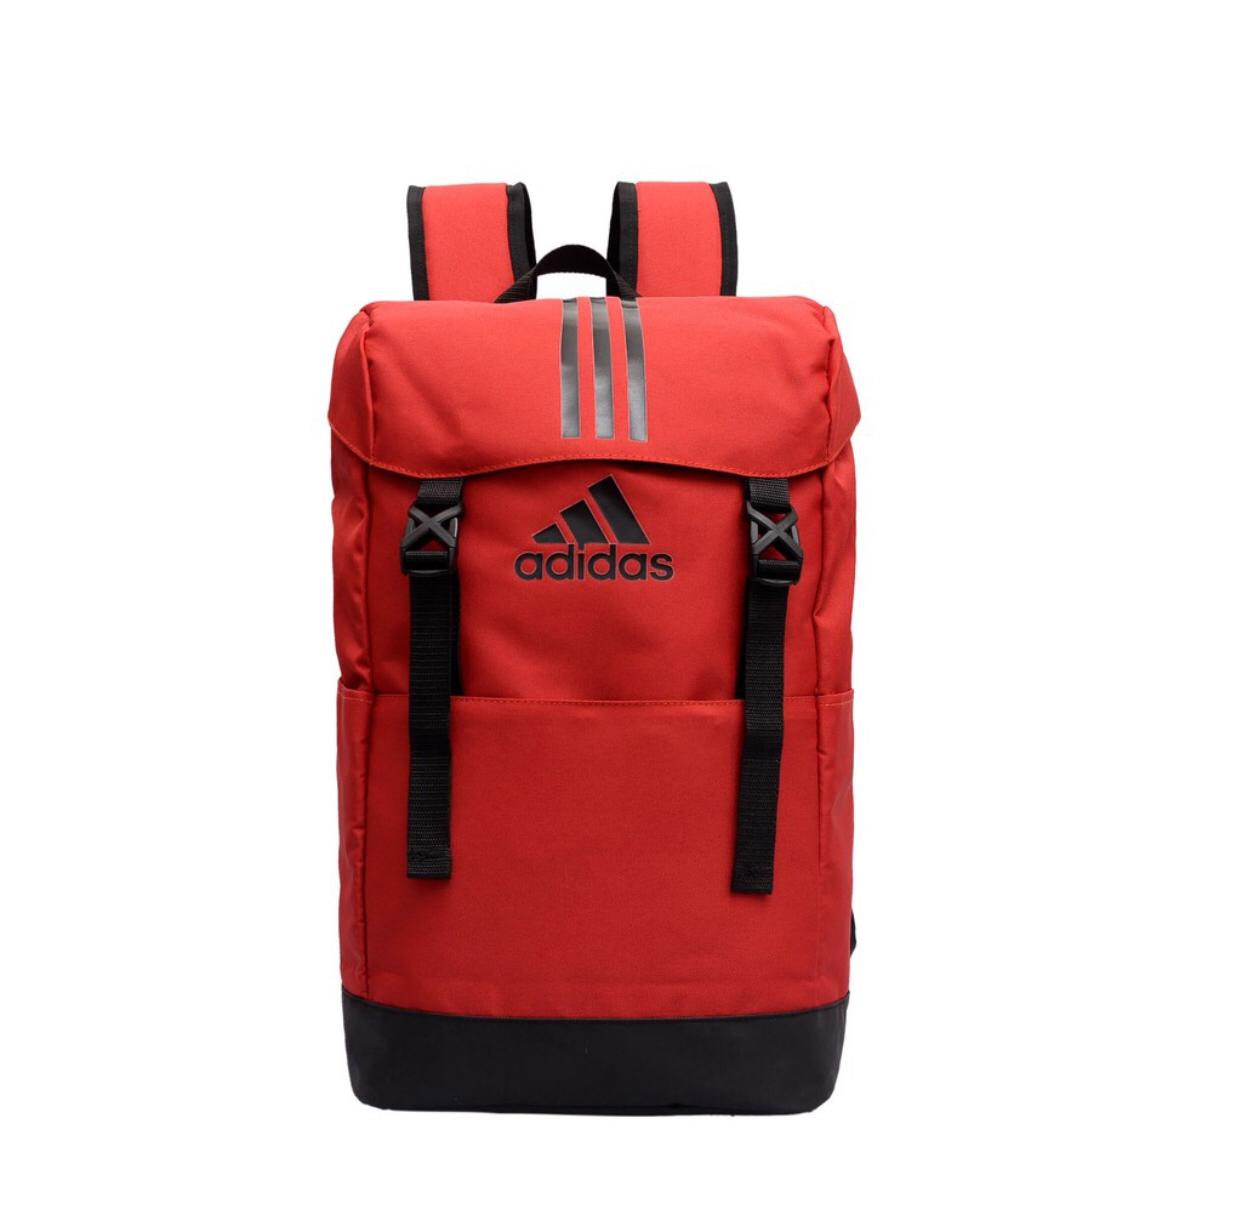 Buy Adidas Backpacks Online | lazada.sg